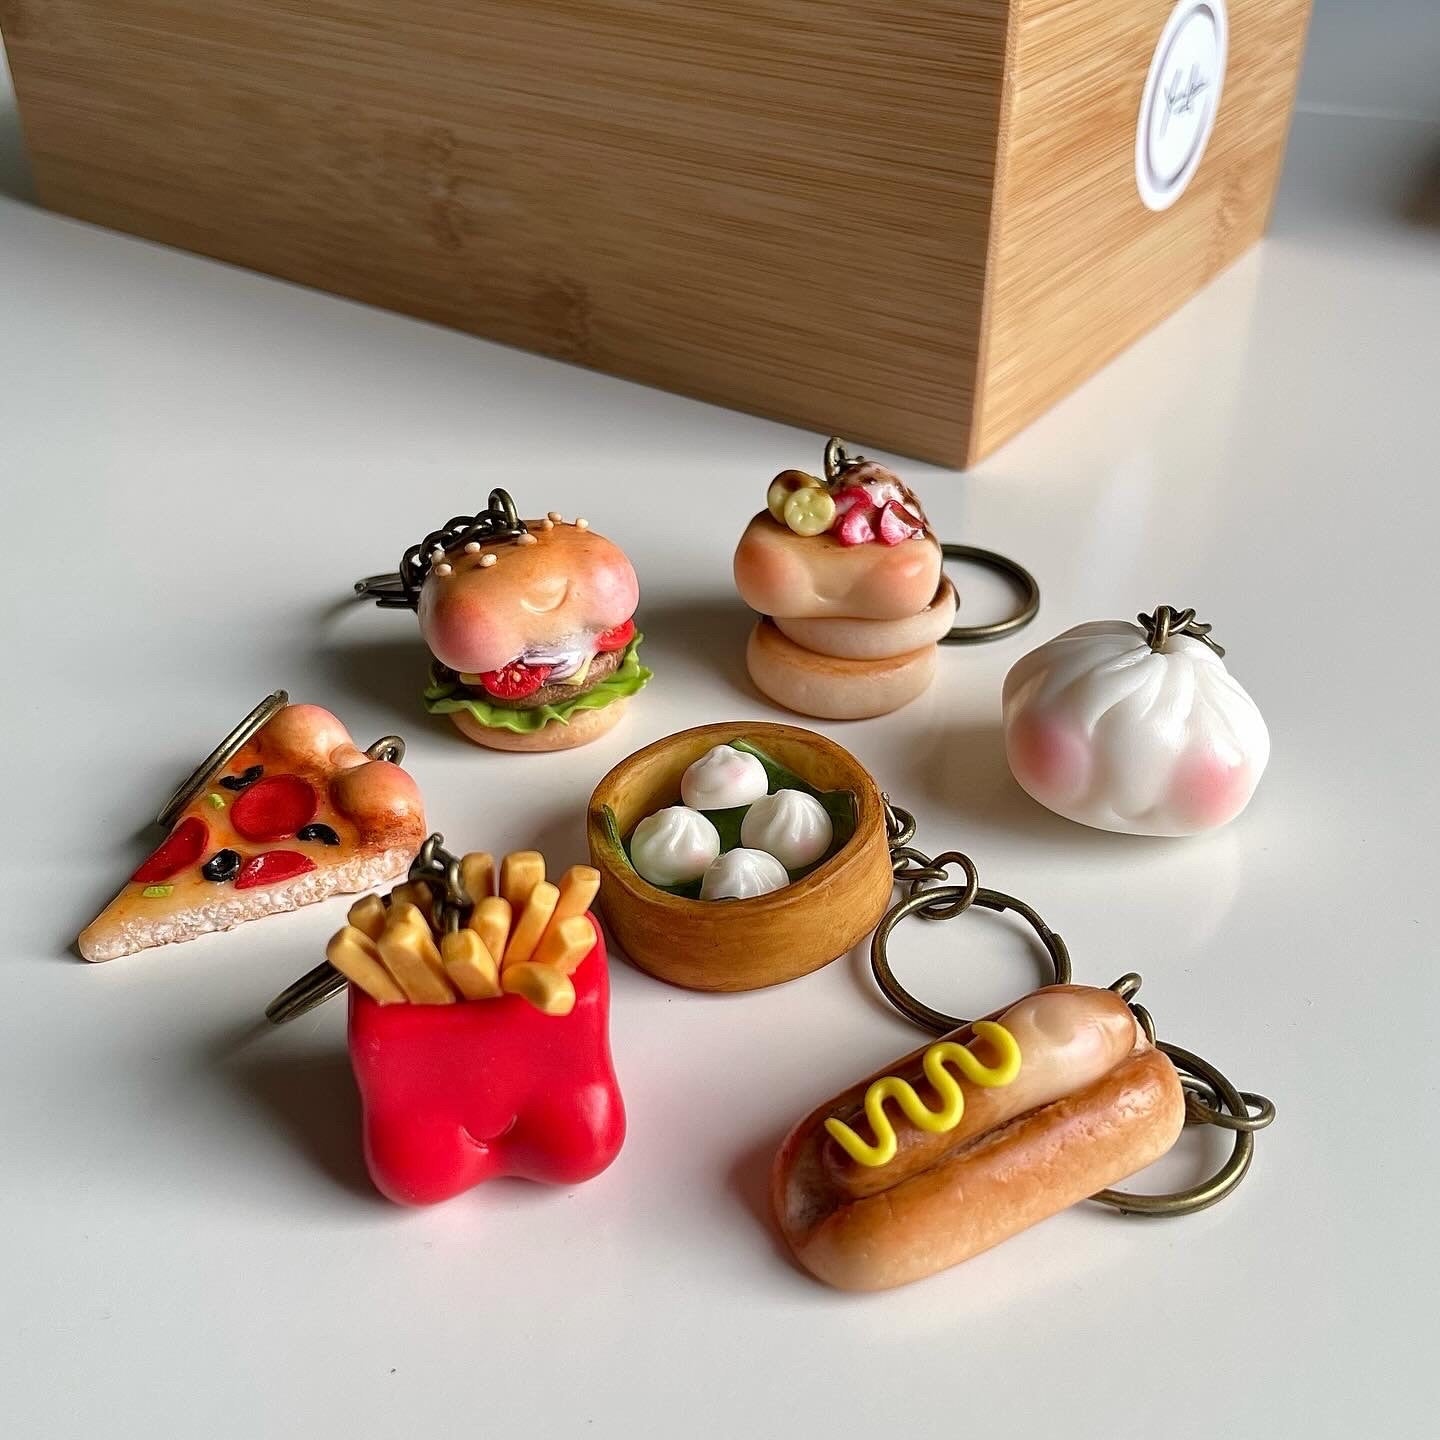 Burger keychain, cute burger charm, burger keyring, cute novelty keychain, polymerclay charm, clay keyring, realistic food, miniature food